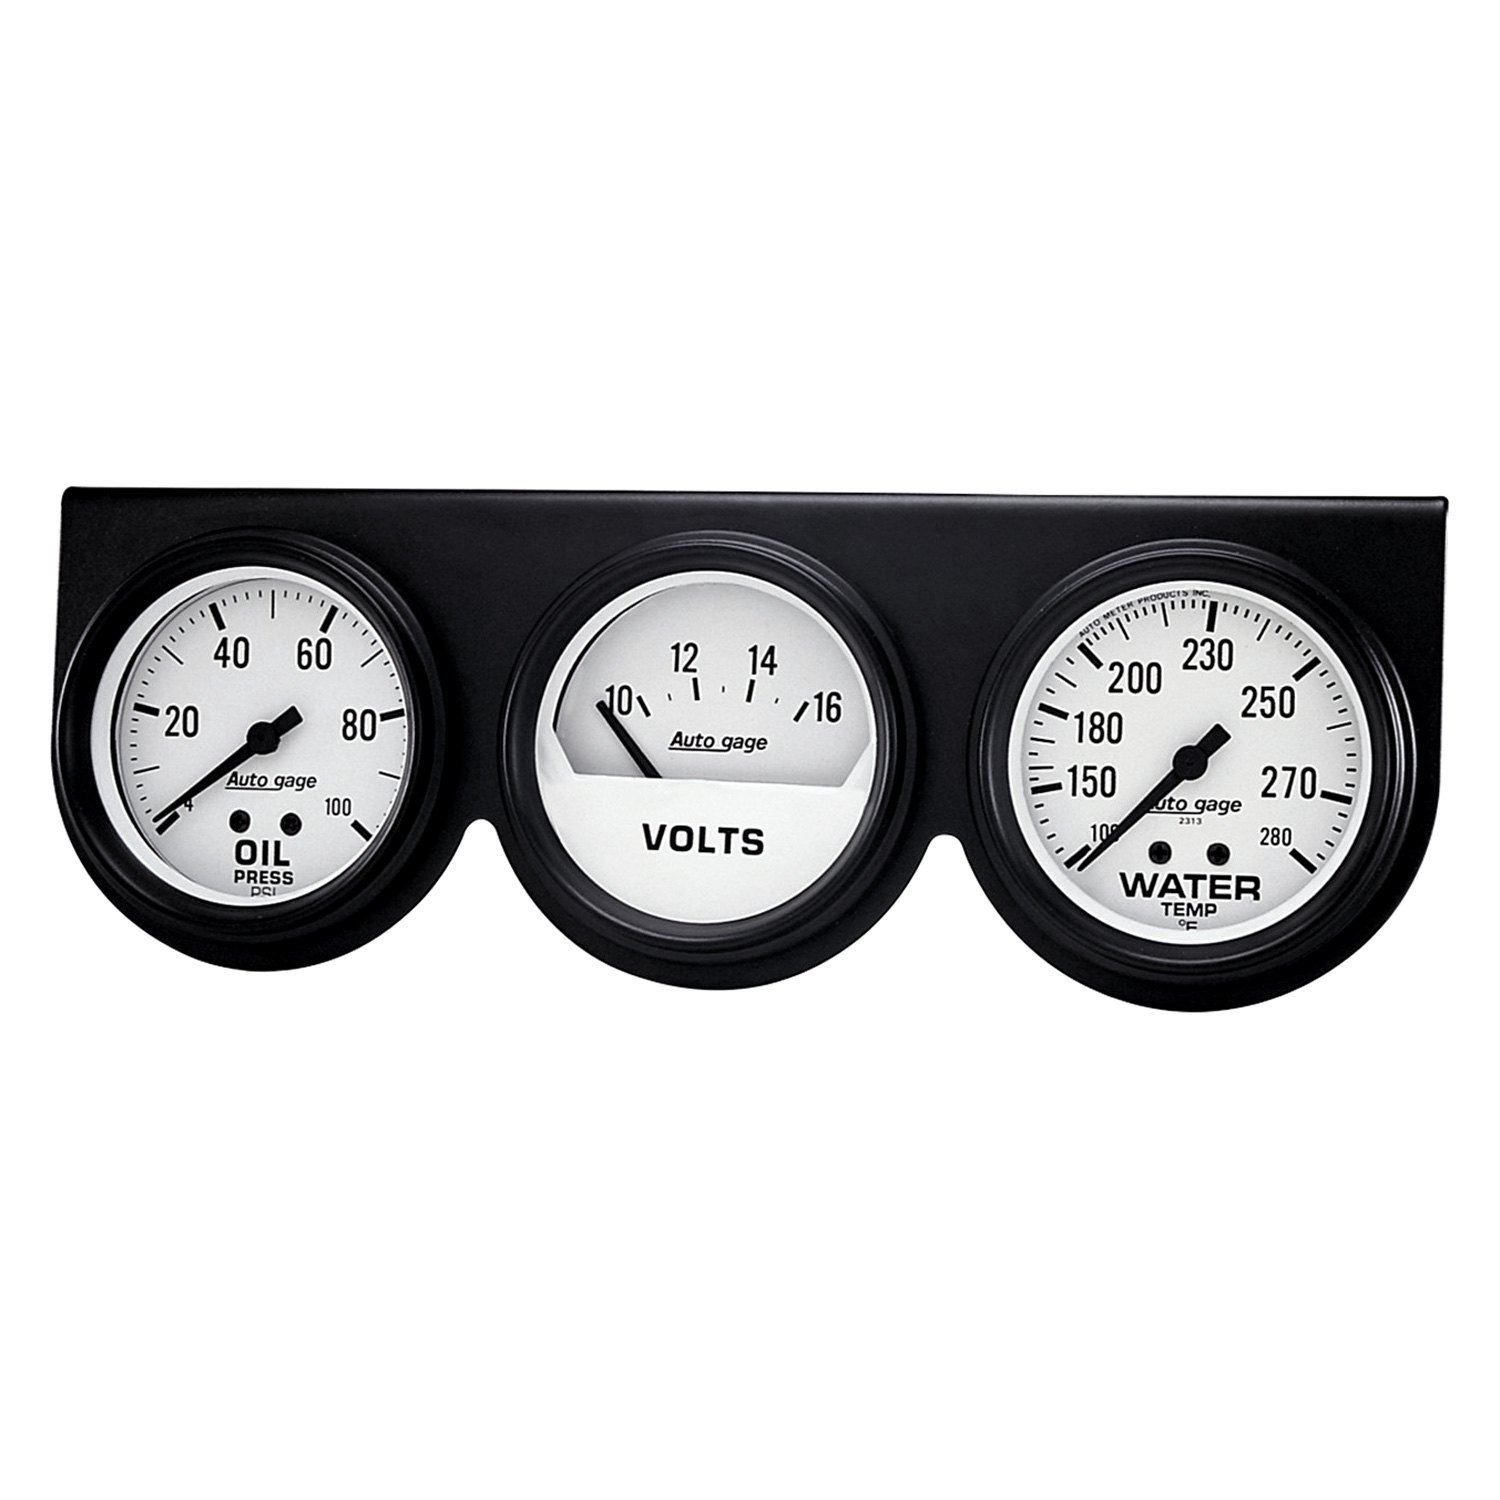 Auto Meter 2300 Autogage Tachometer : : Car & Motorbike